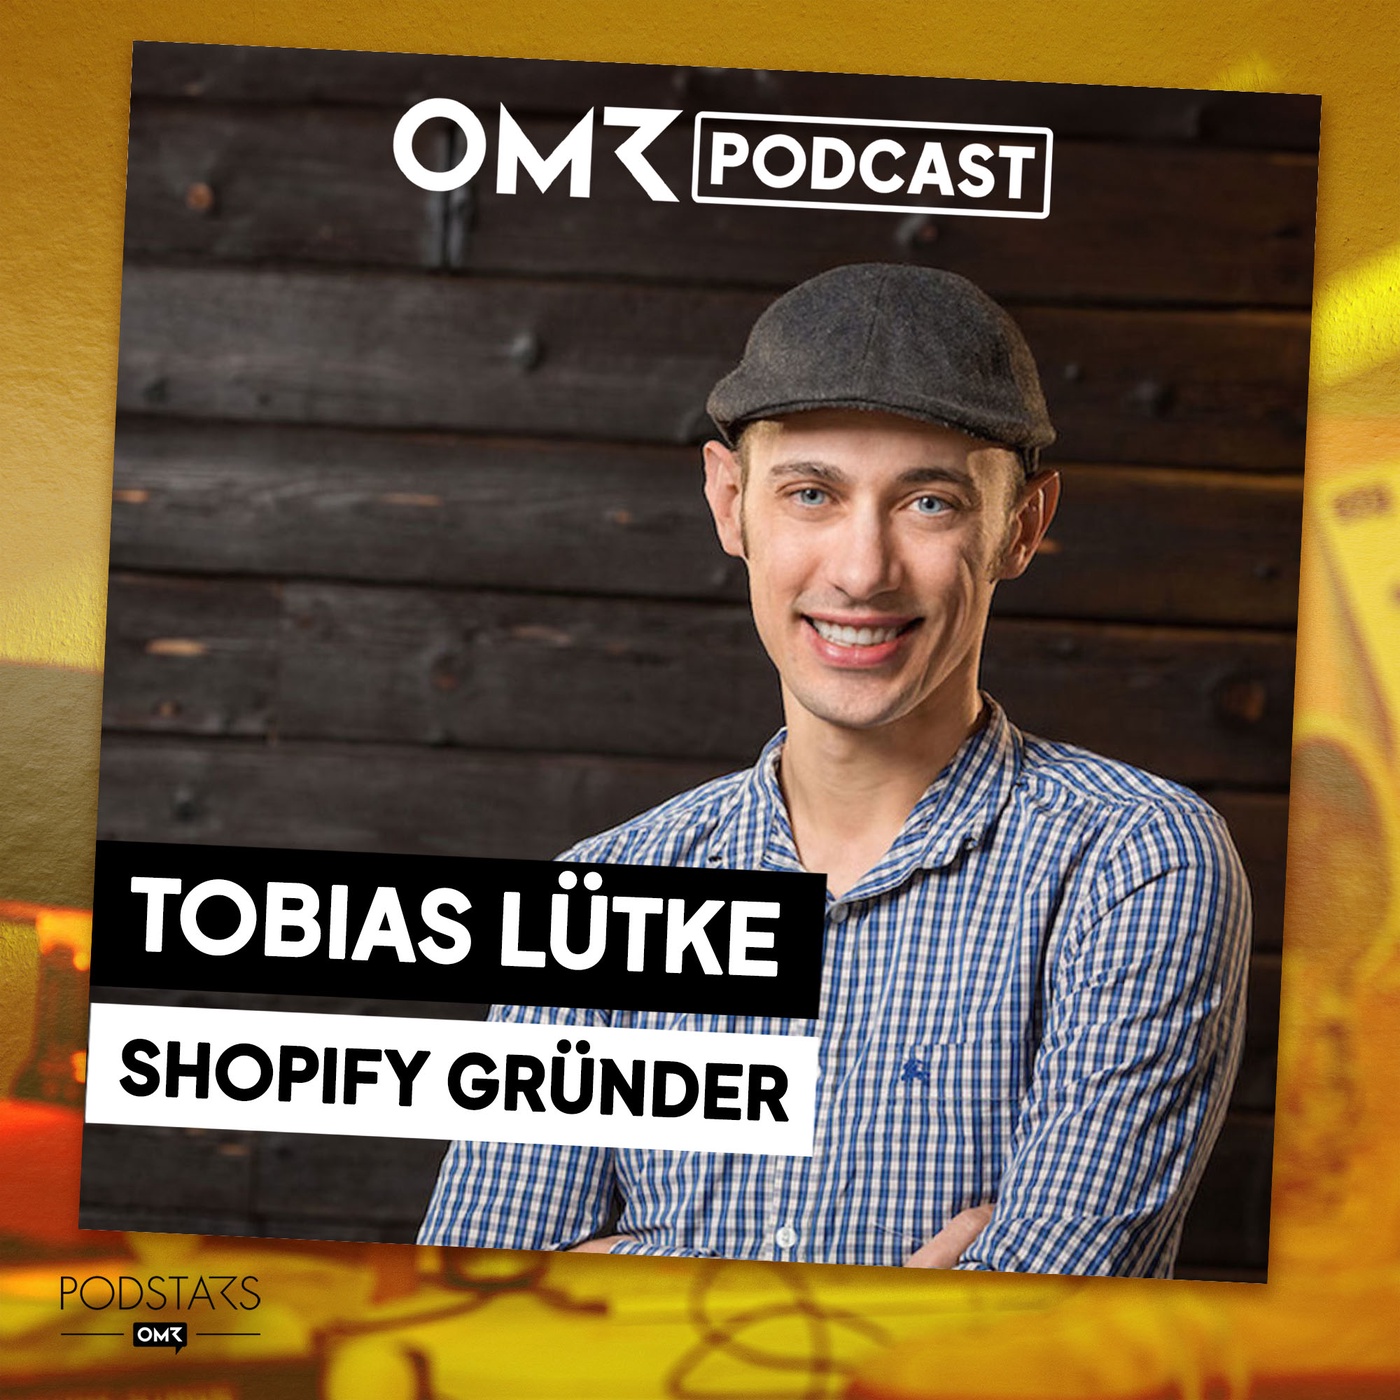 OMR Classic mit Shopify-Gründer Tobias Lütke